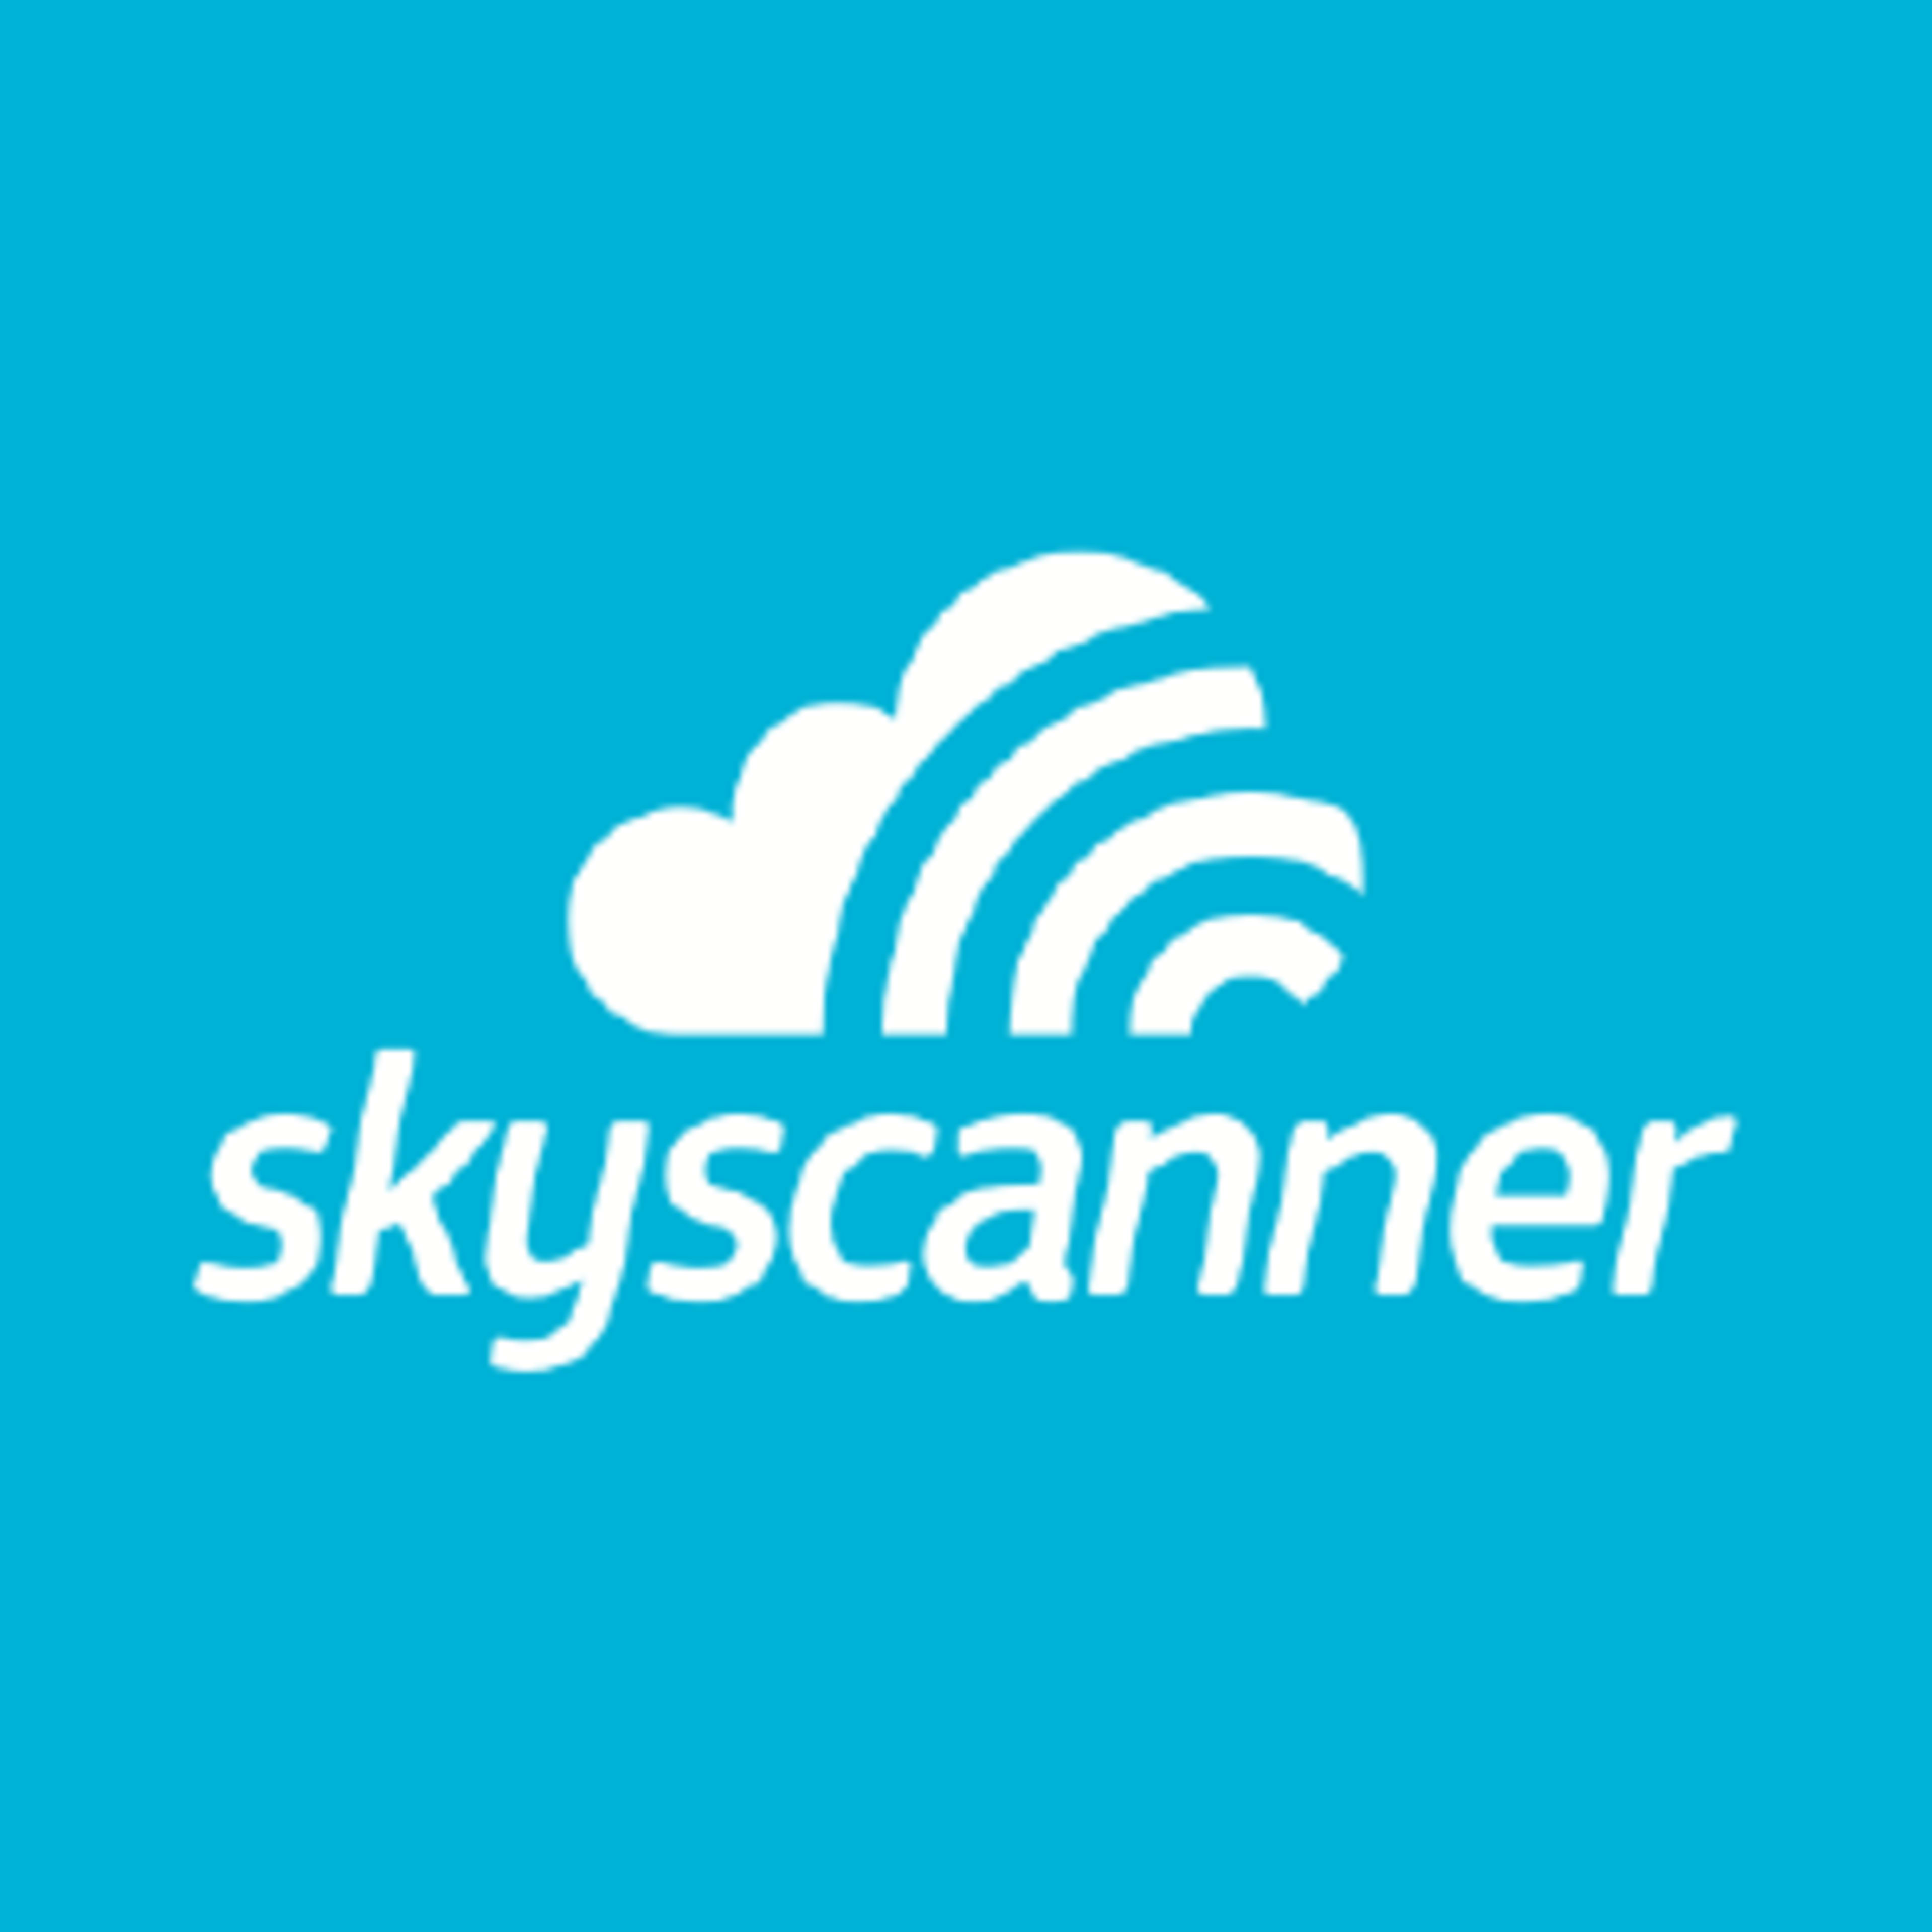 SkyscannerCode